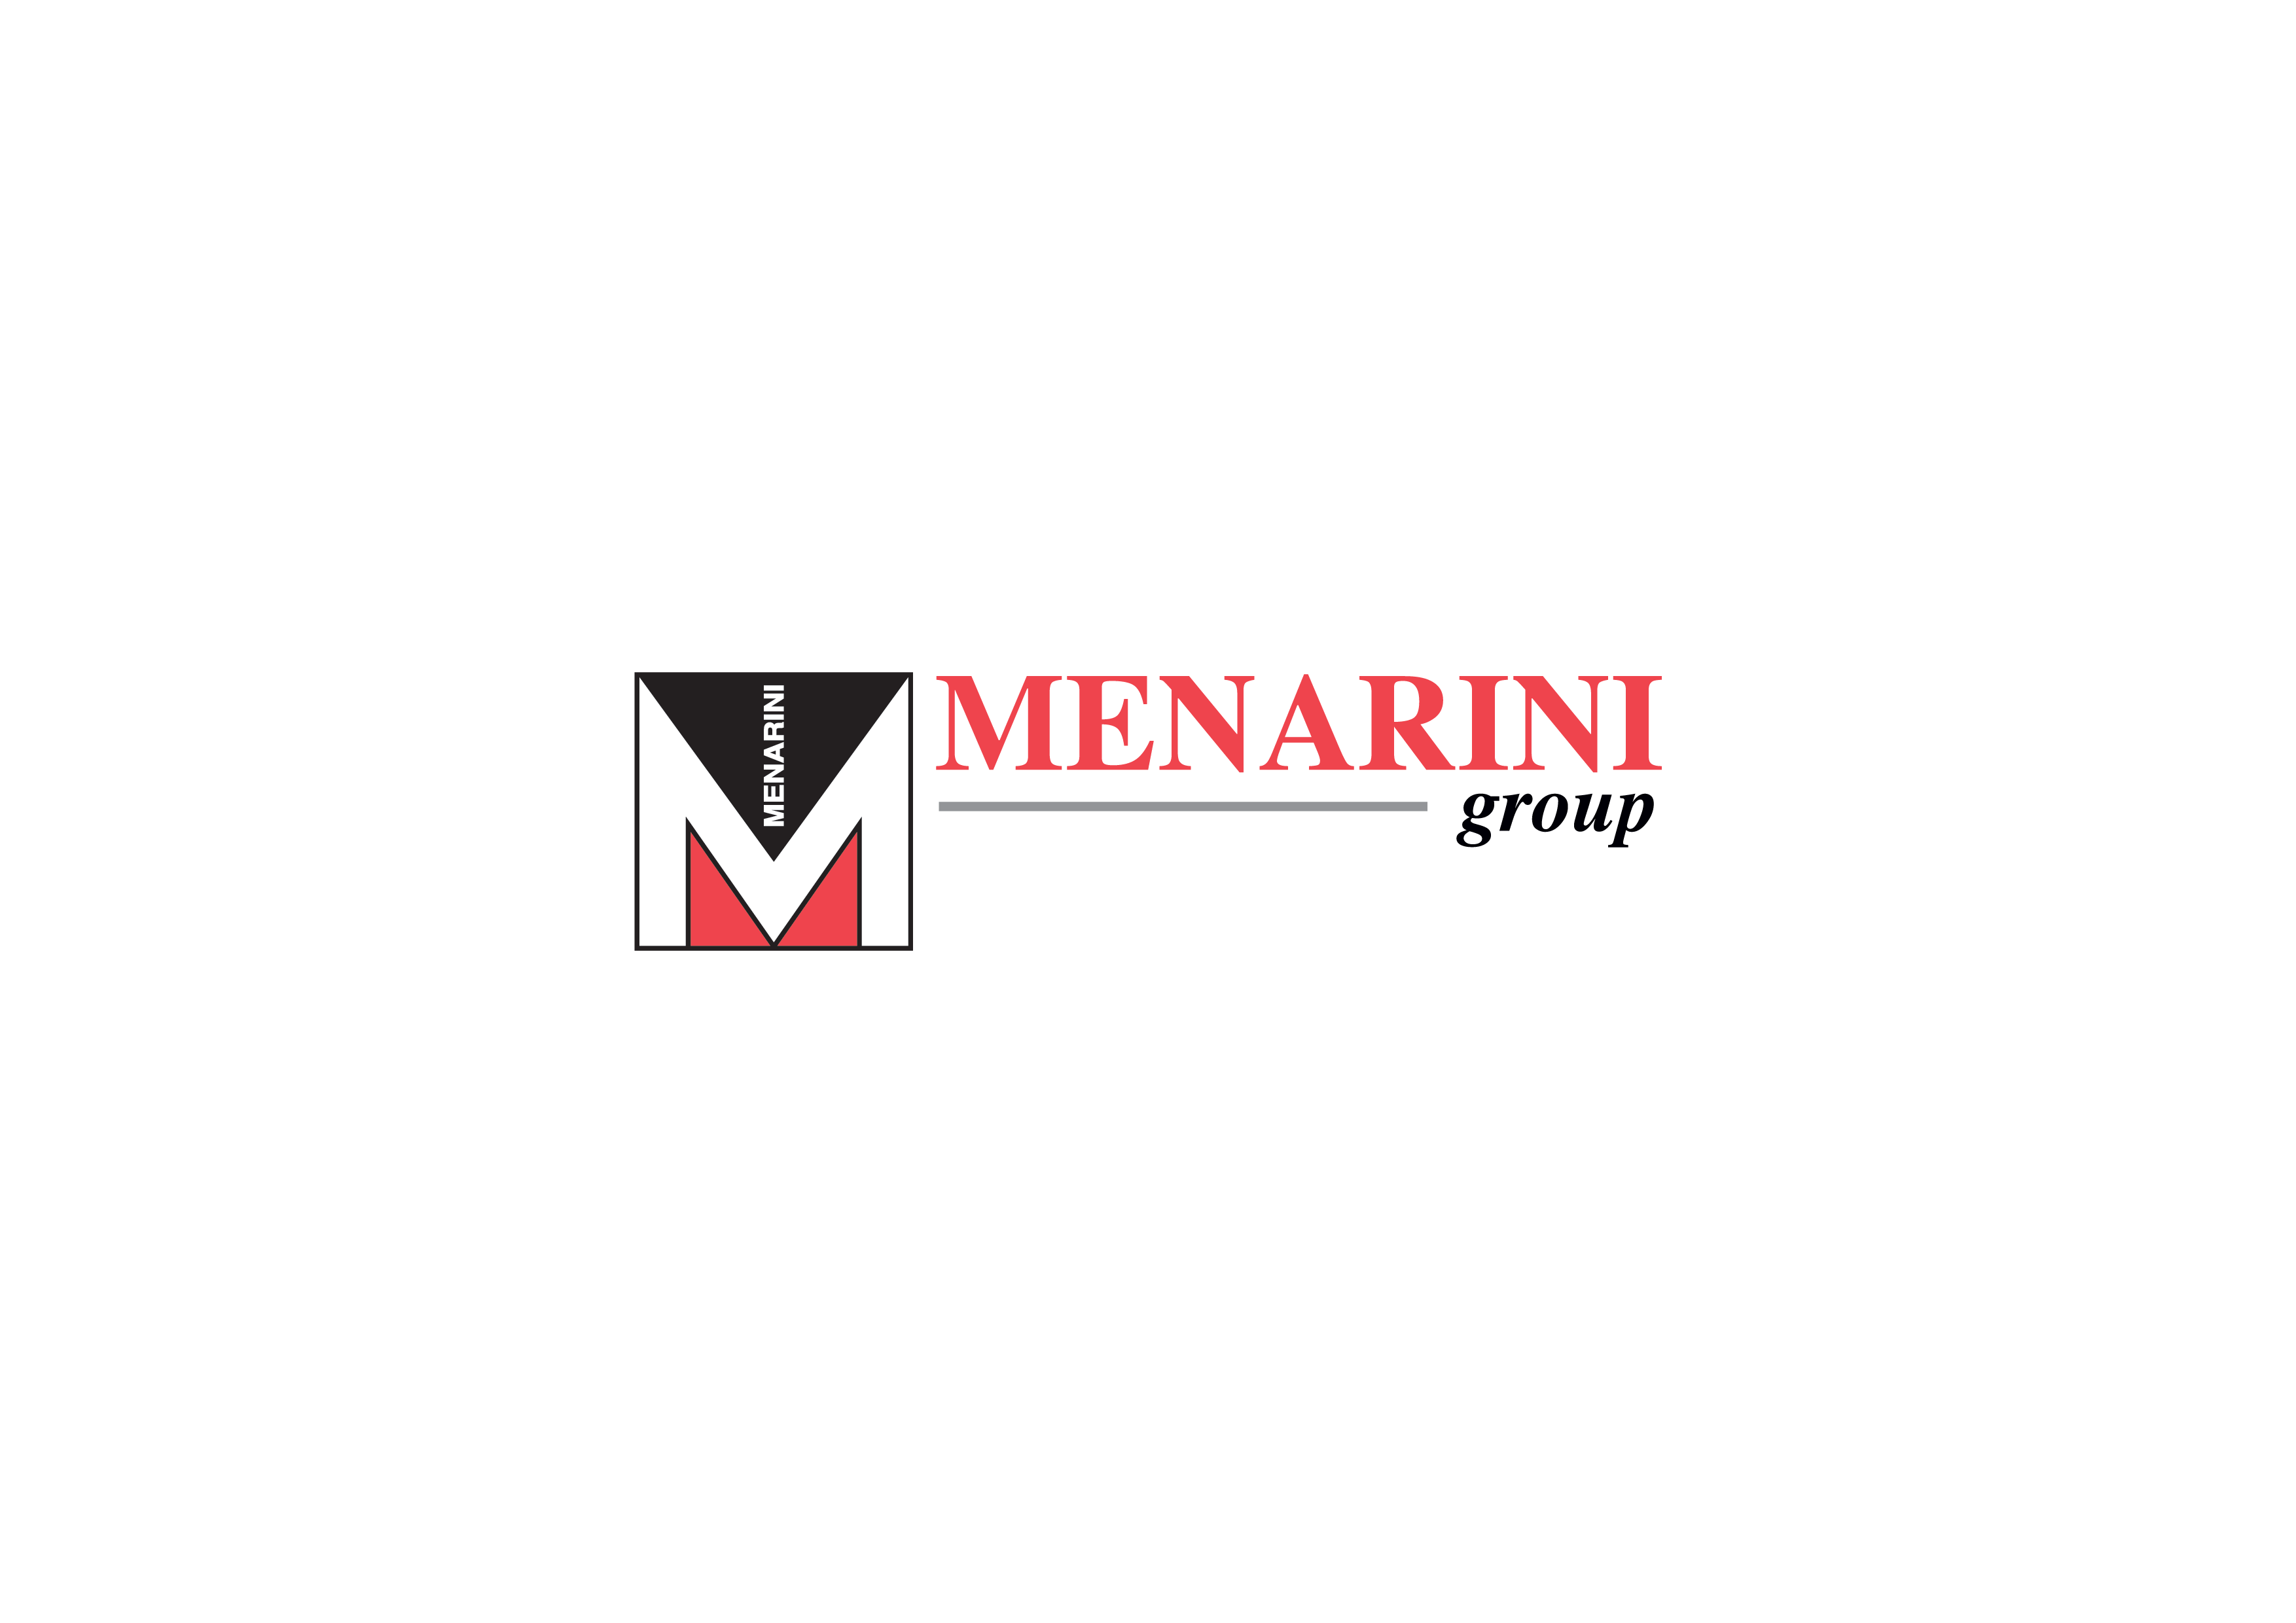 MENARINI GROUP Logo 2017